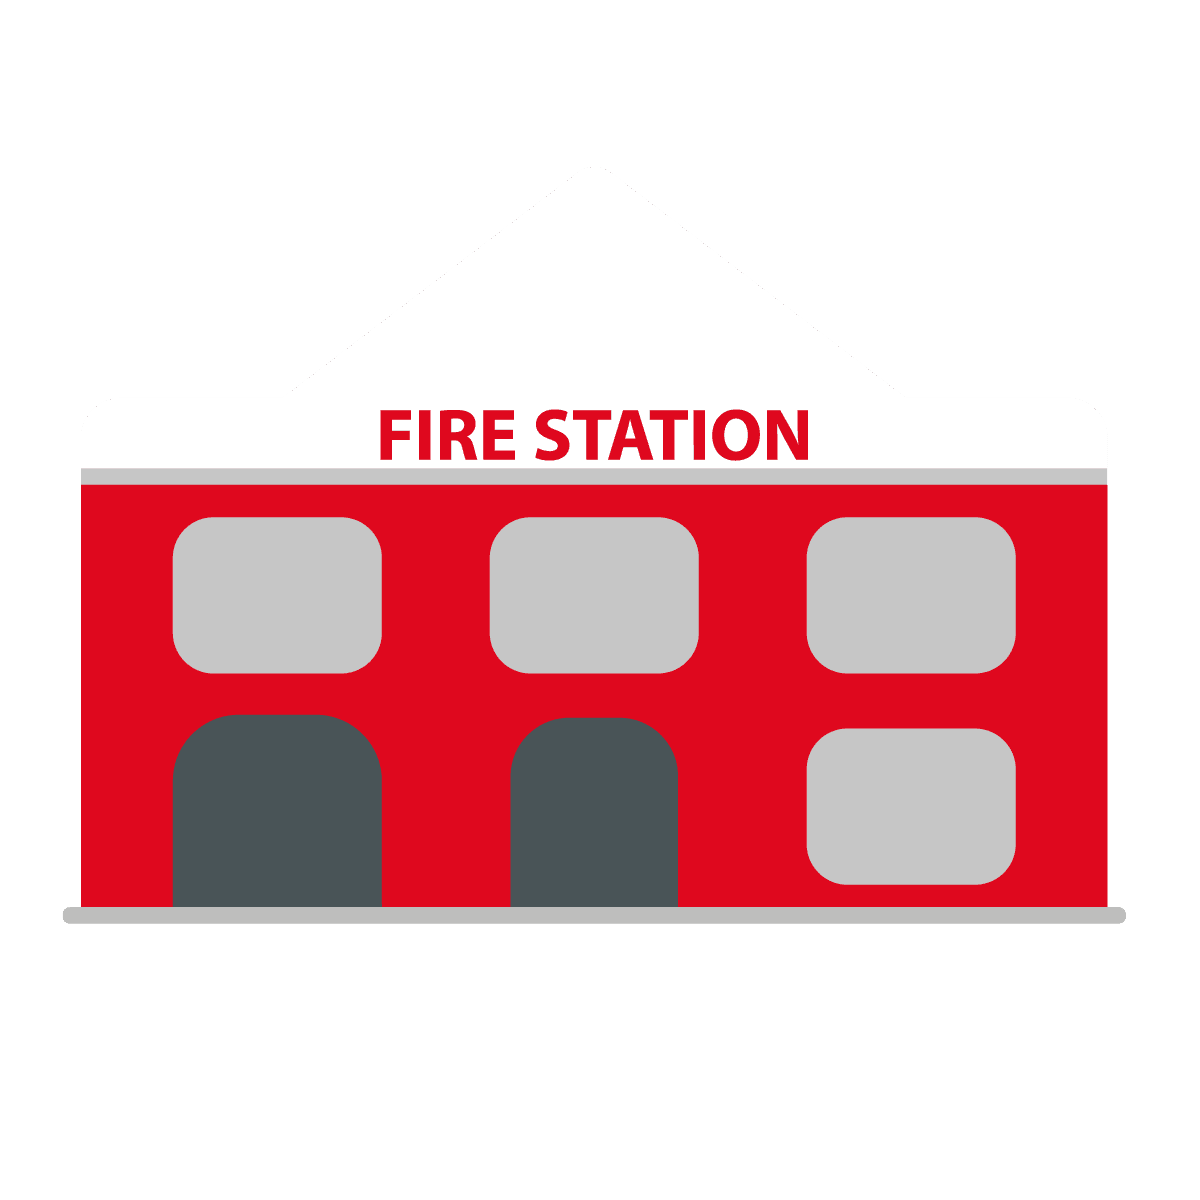 Fire Station Playground Marking